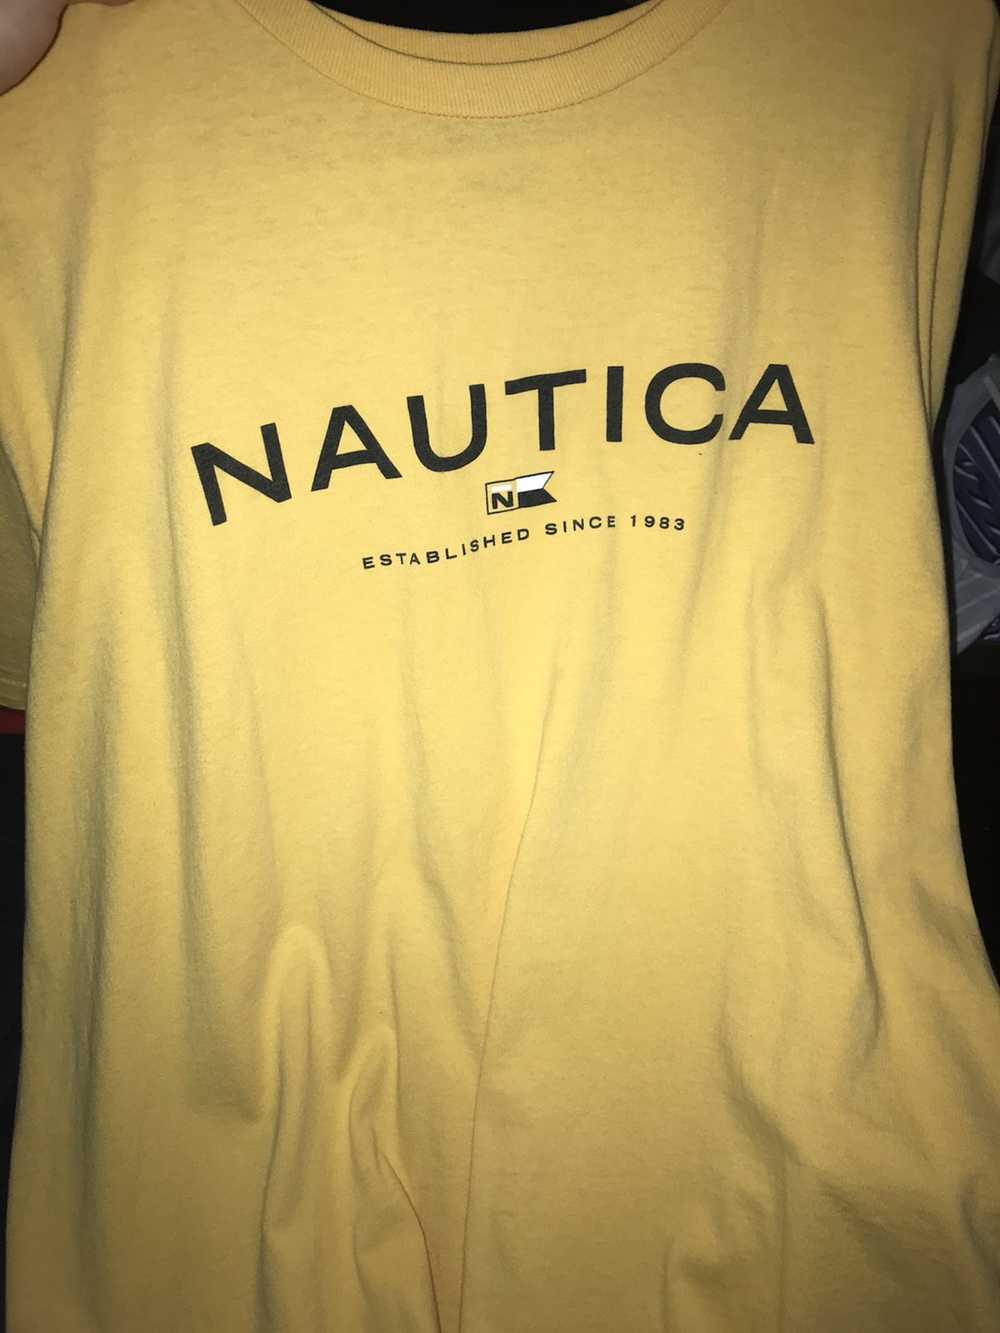 Nautica Nautical Vintage T-Shirt - image 1